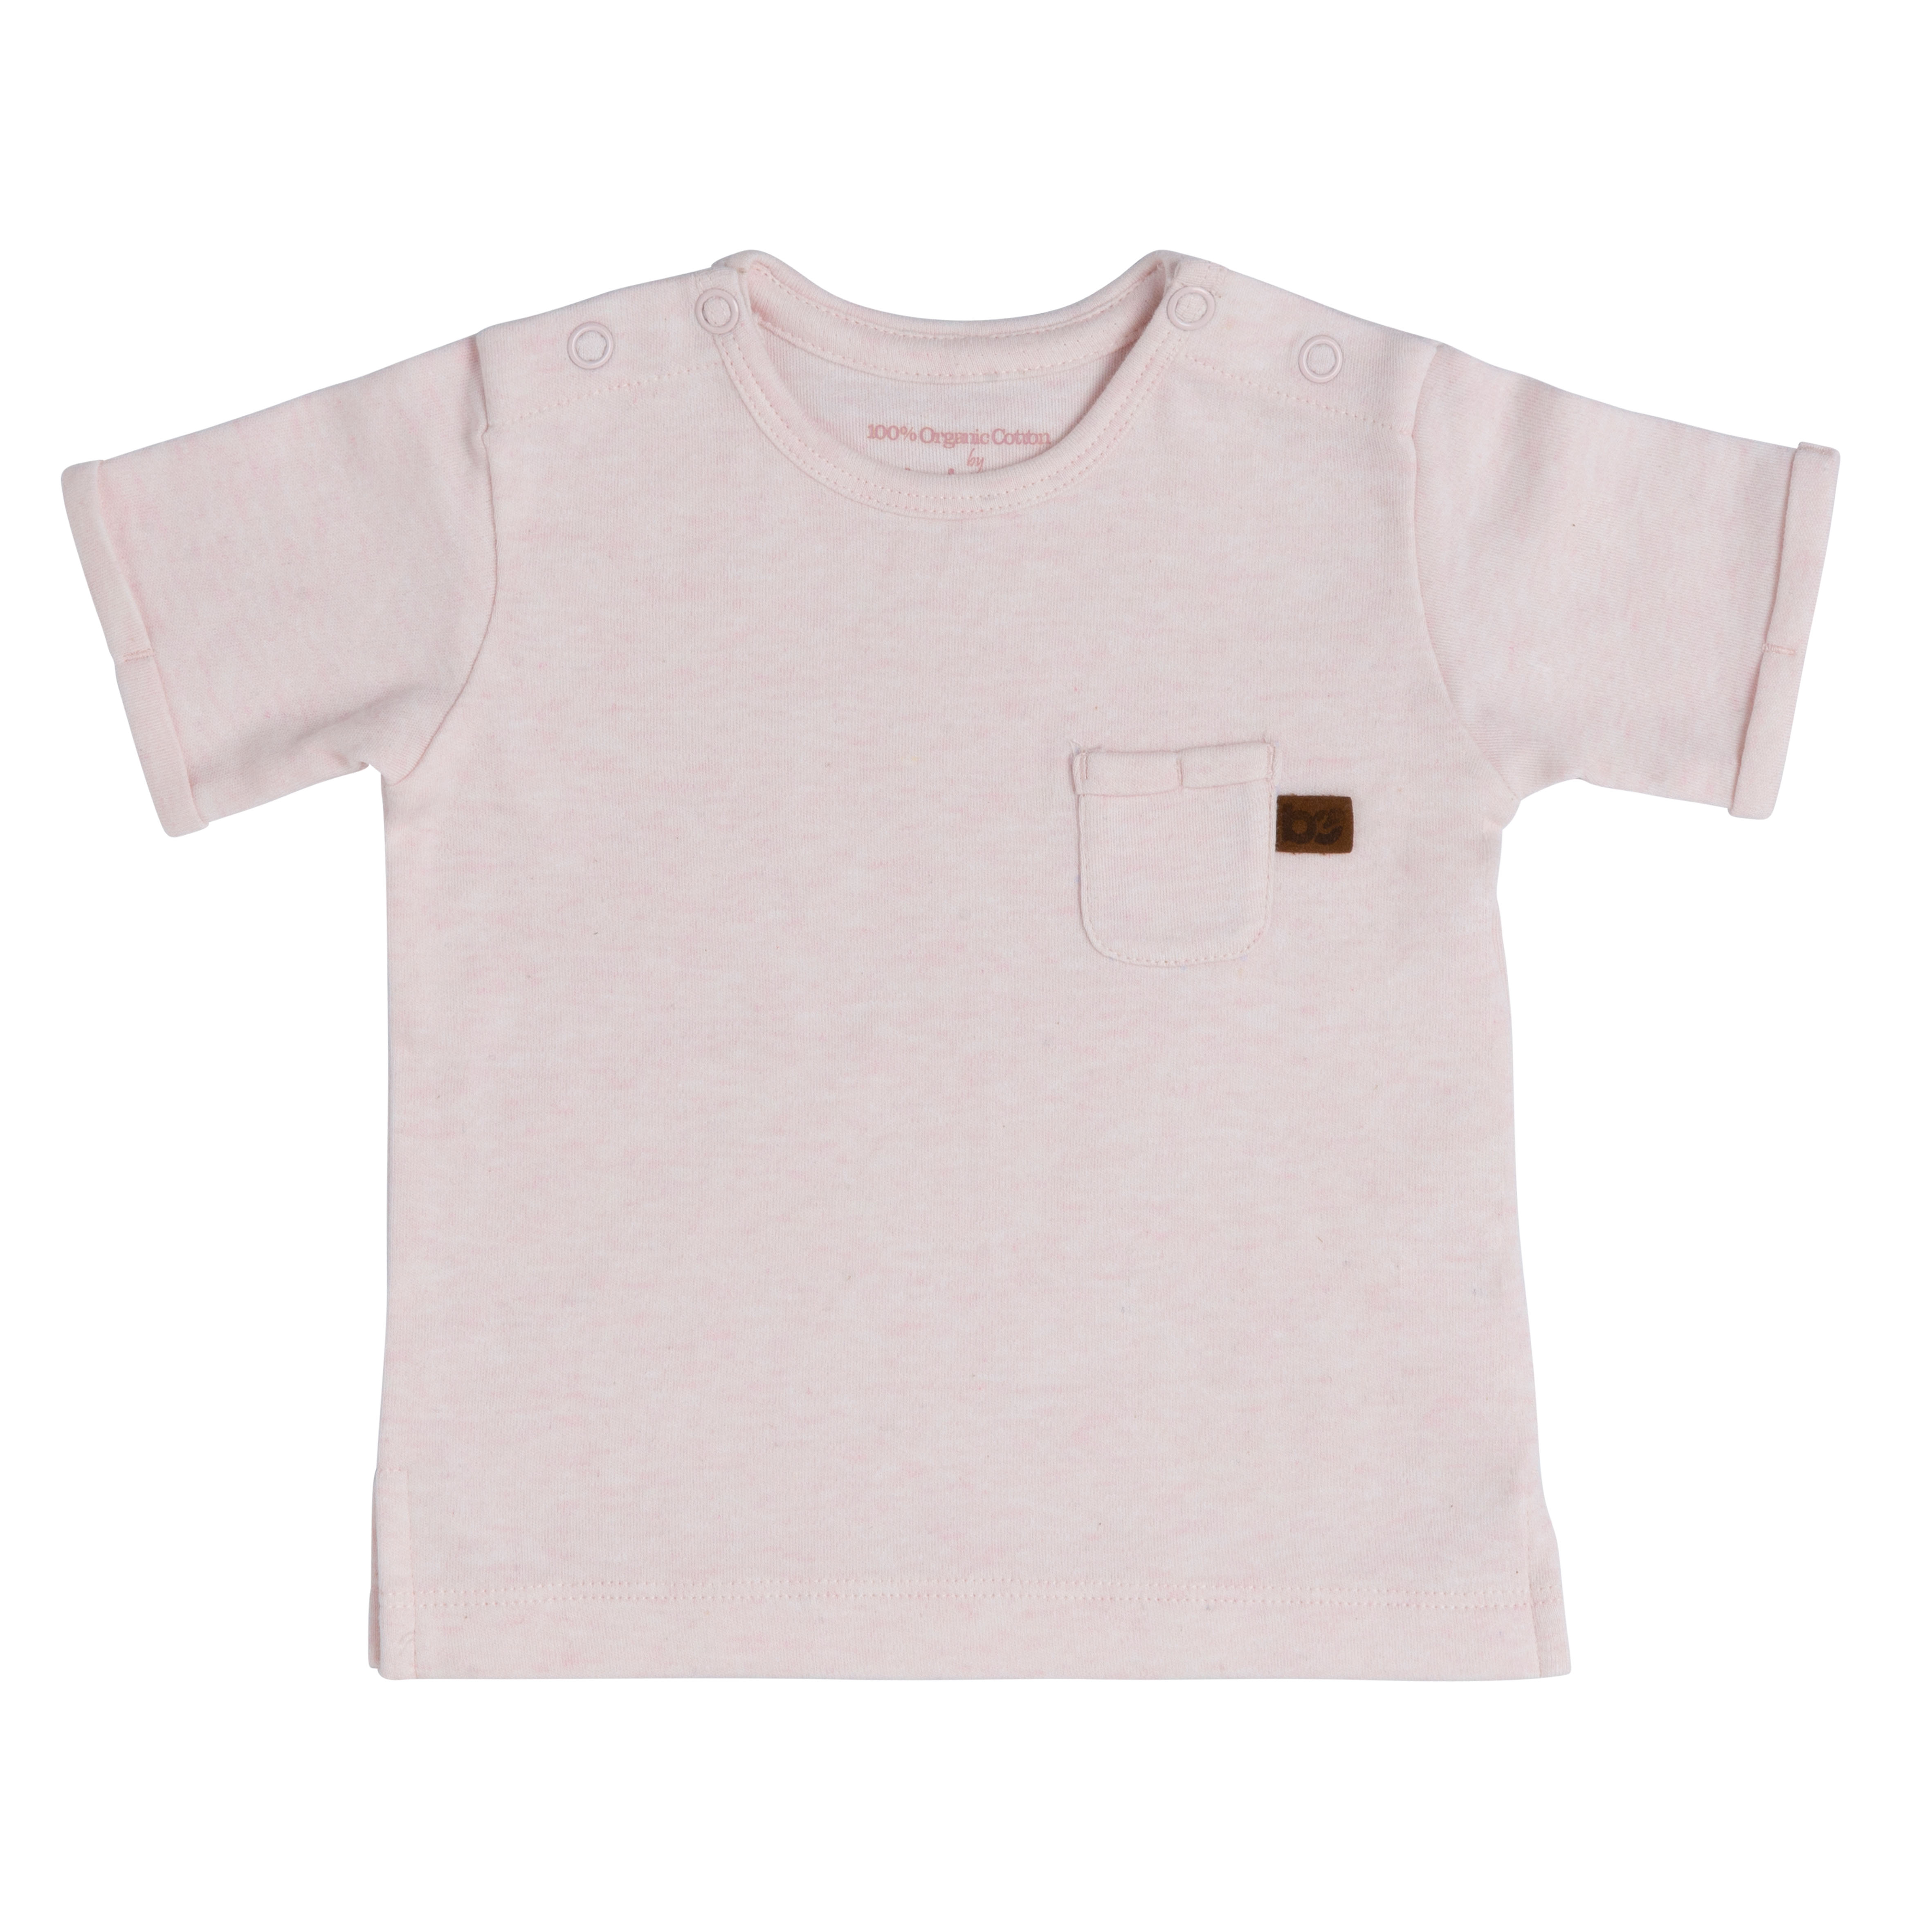 T-shirt Melange rose très clair - 56